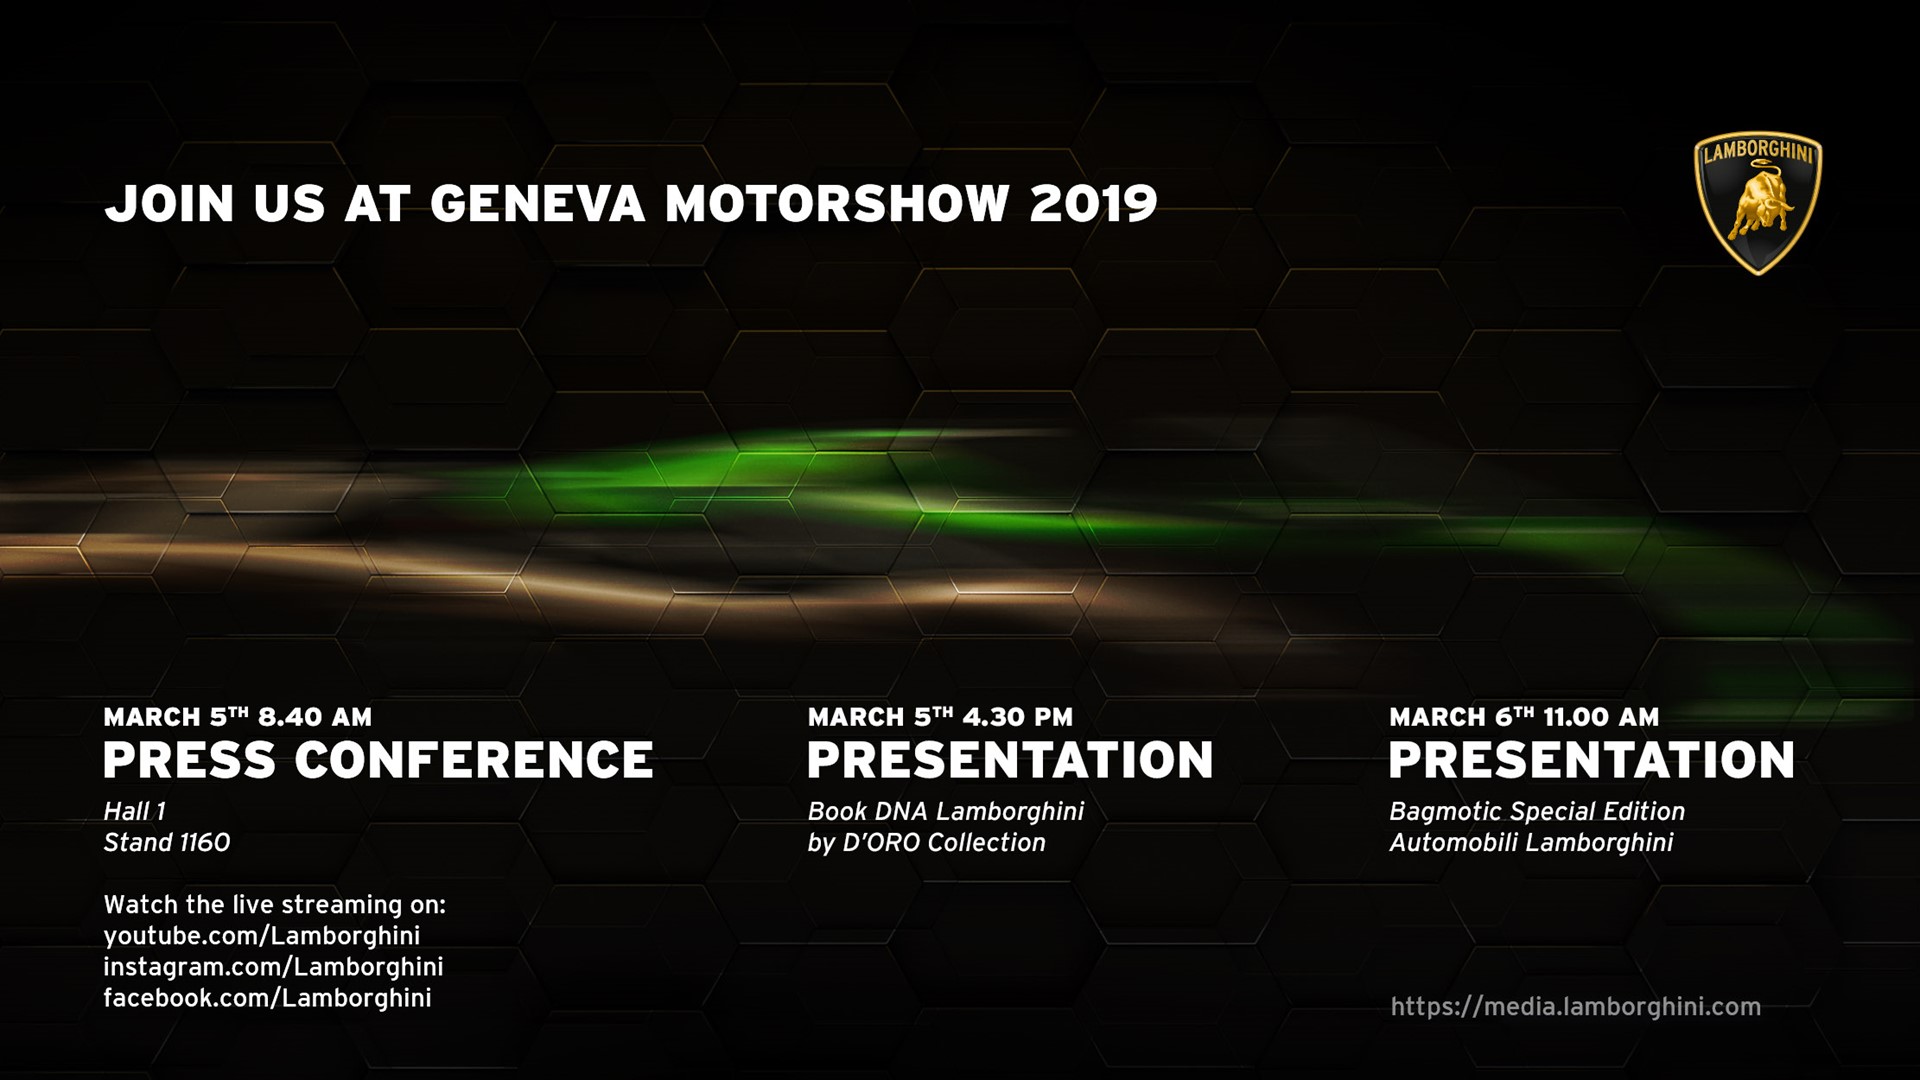 Geneva Motor show 2019 - Invitation